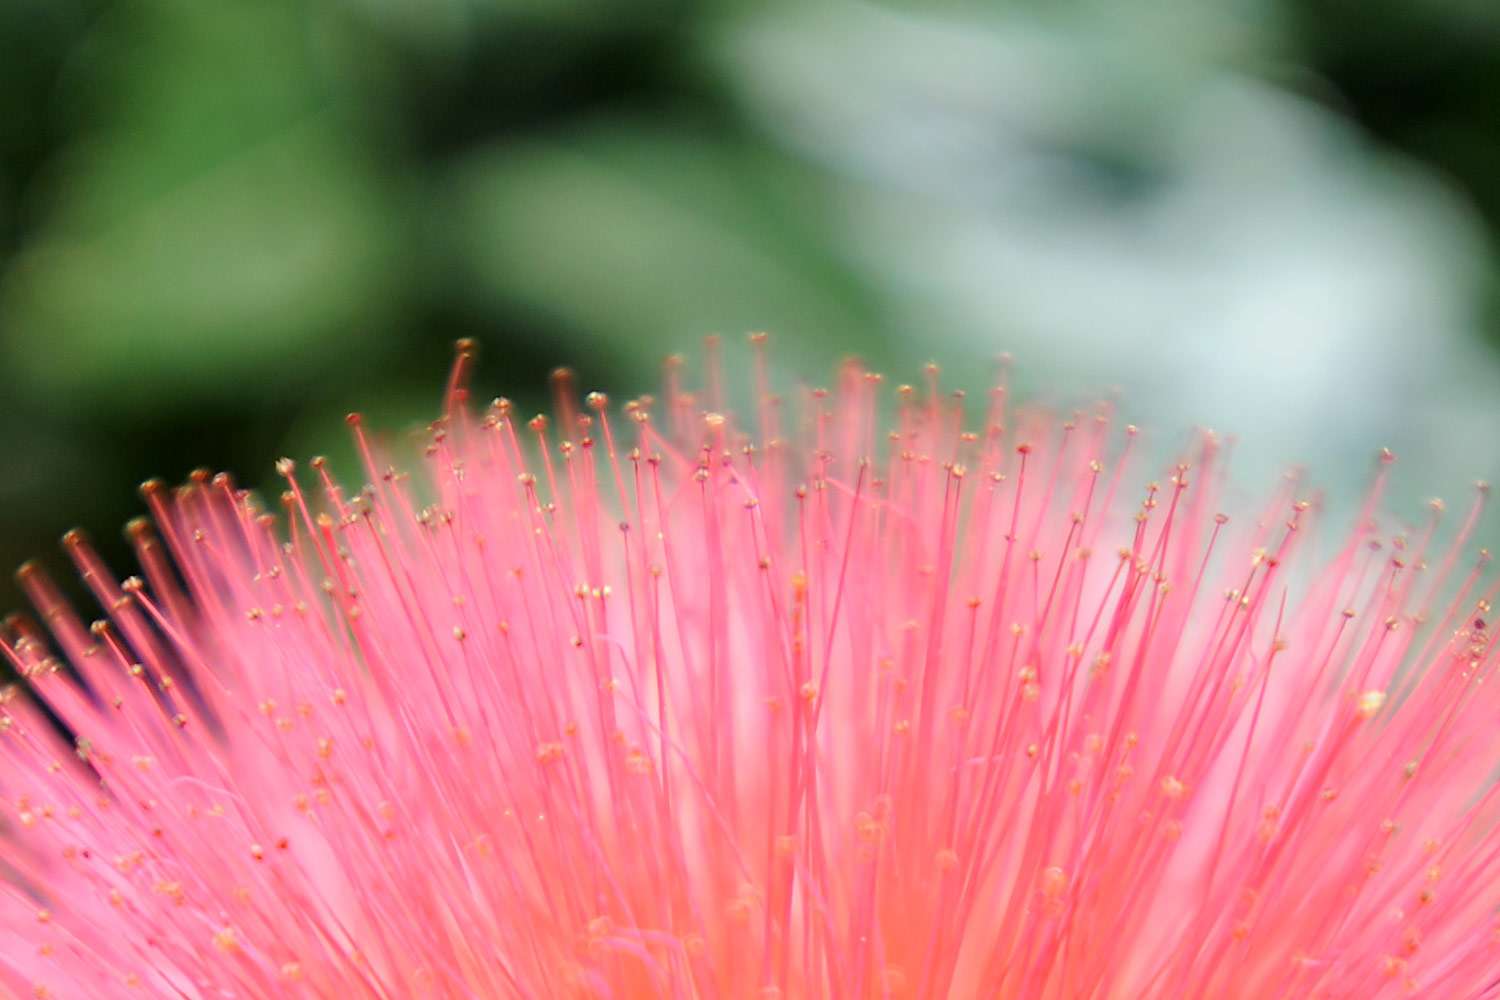 Flower close up, Costa Rica.